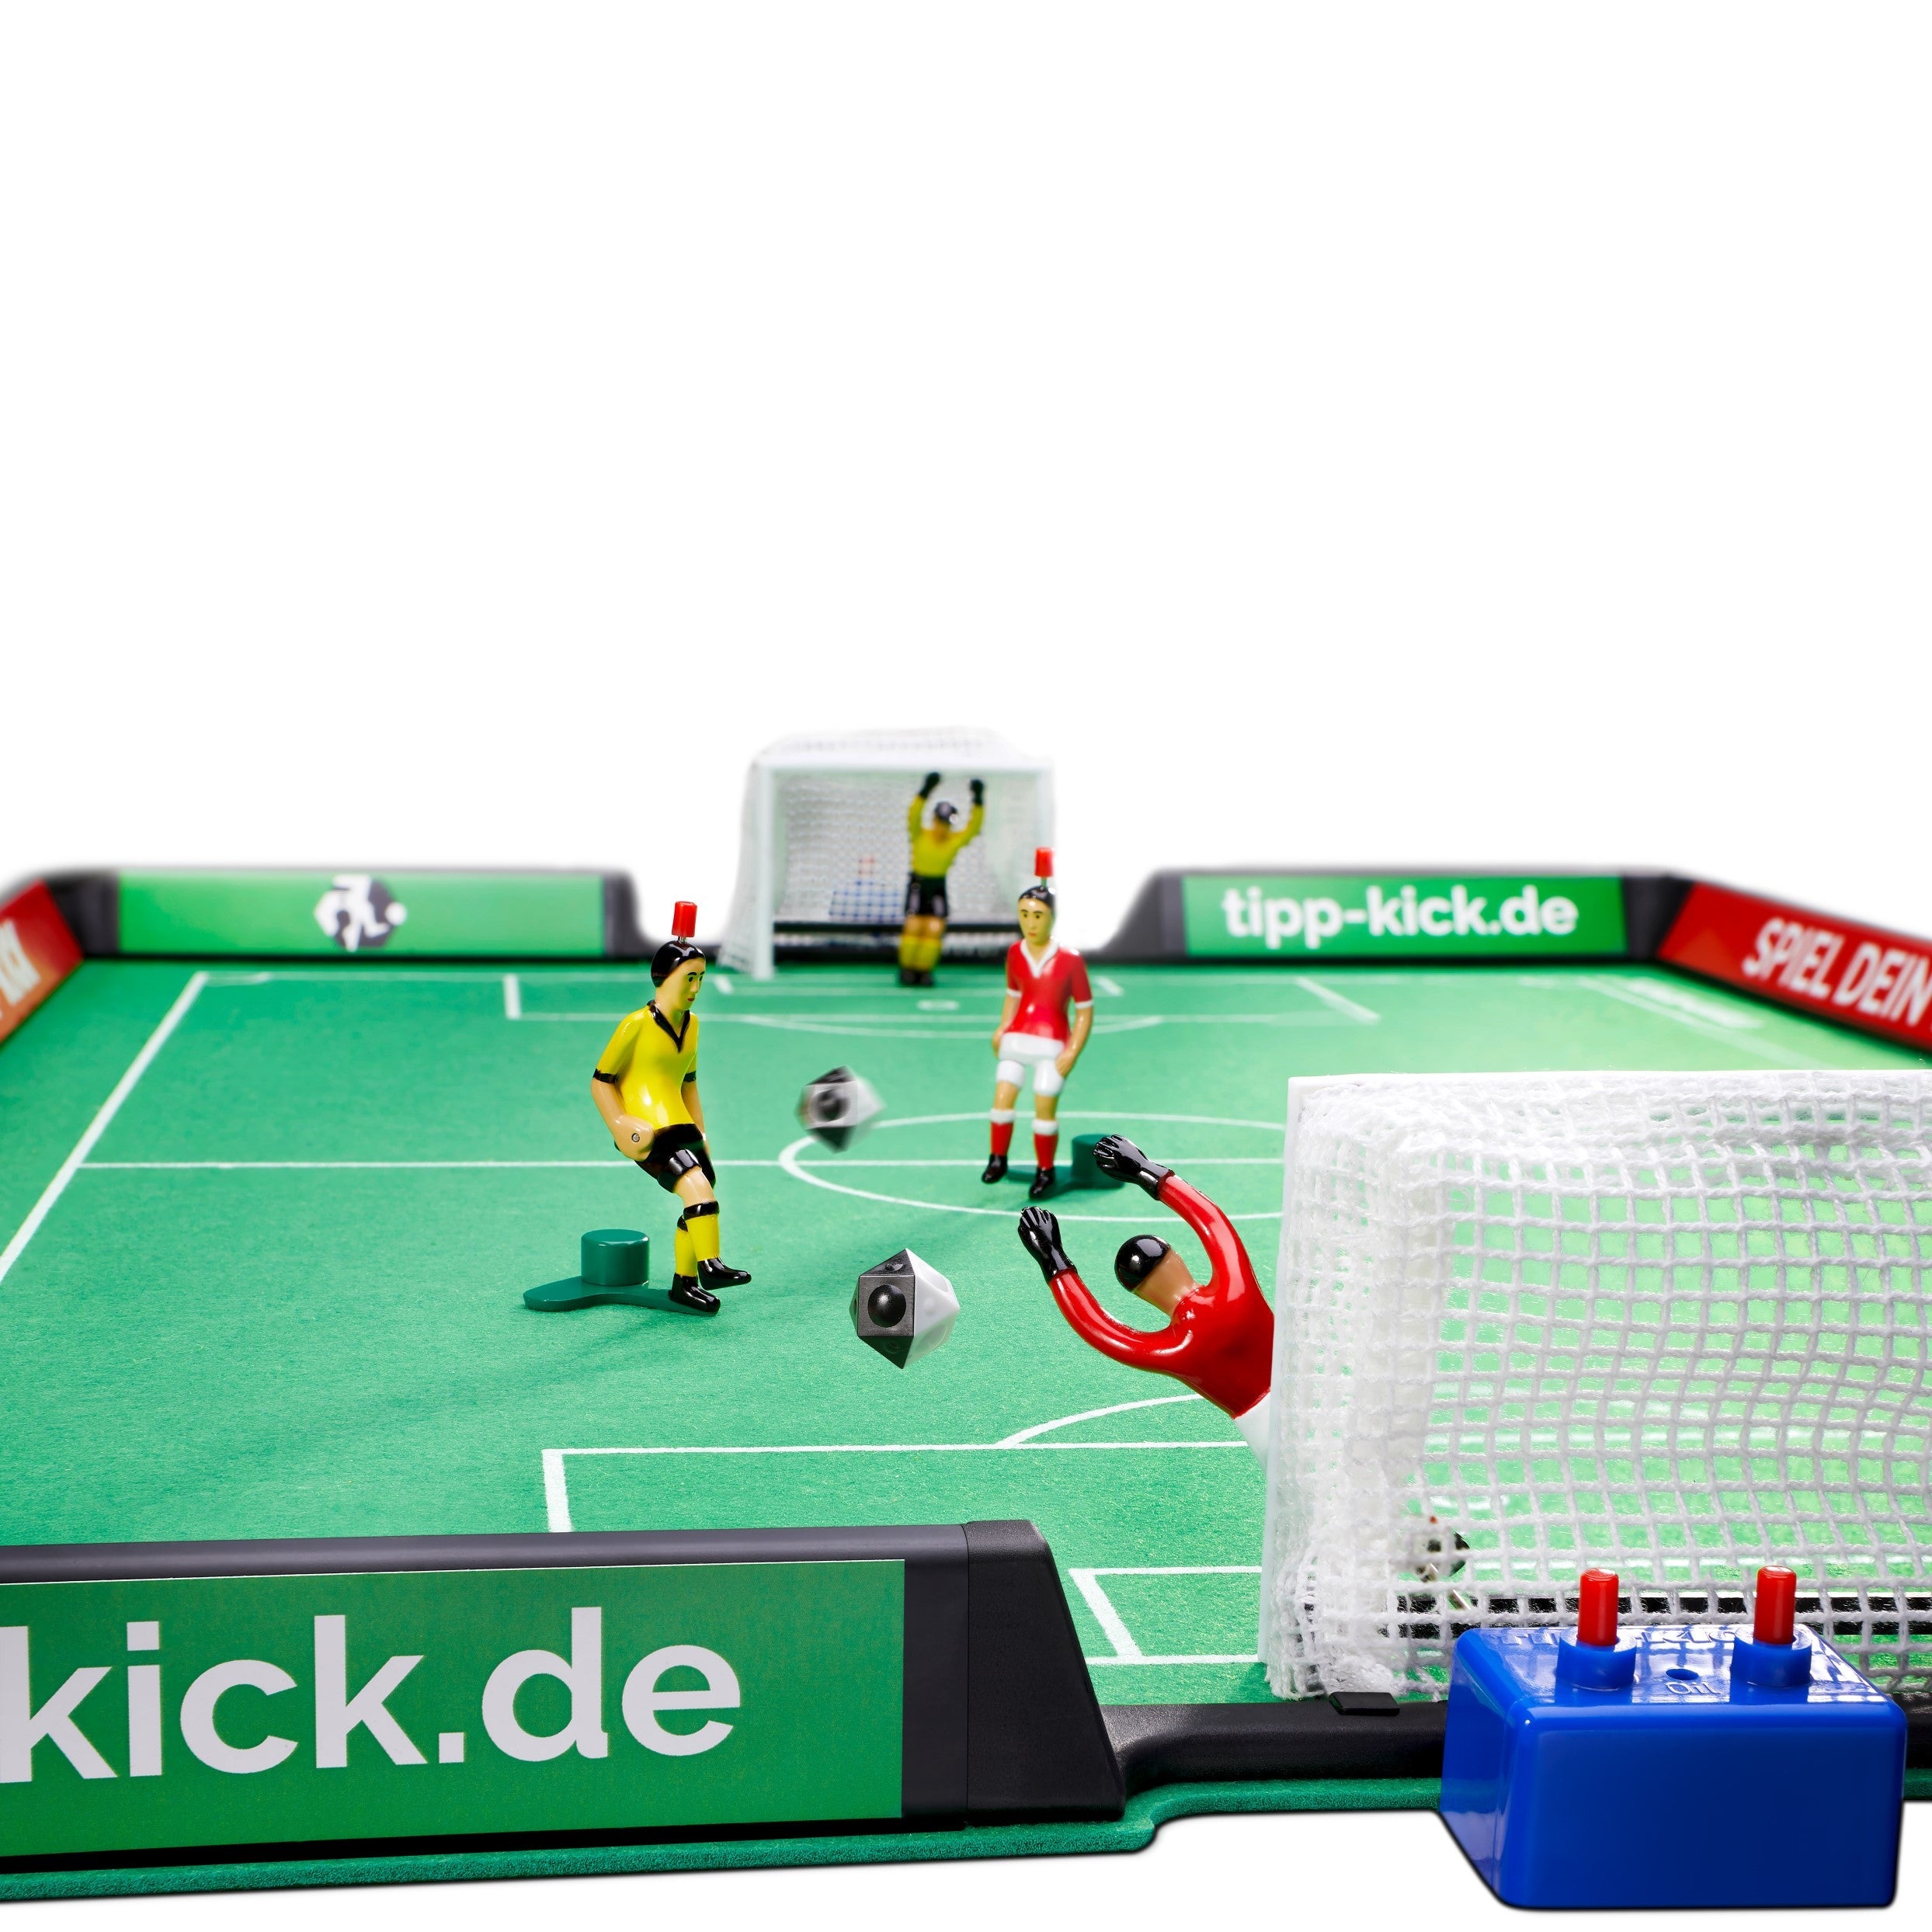 TIPP-KICK Net Goal Set for TIPP-KICK Soccer Games: Set of 2